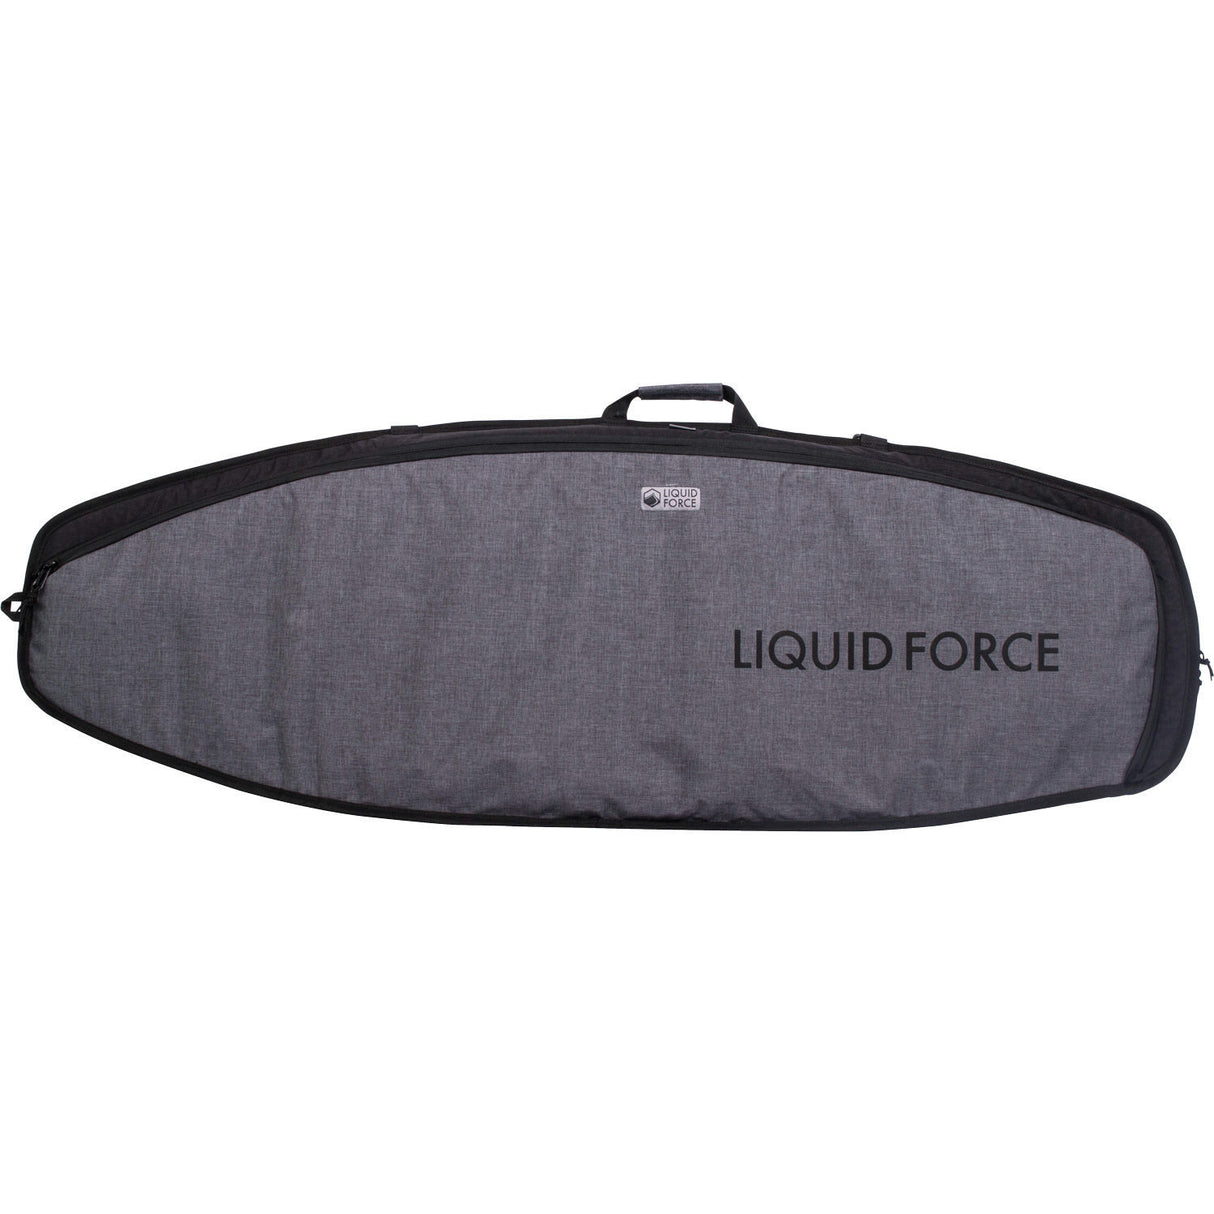 Liquid Force DLX Day Tripper Wakesurf Board Bag